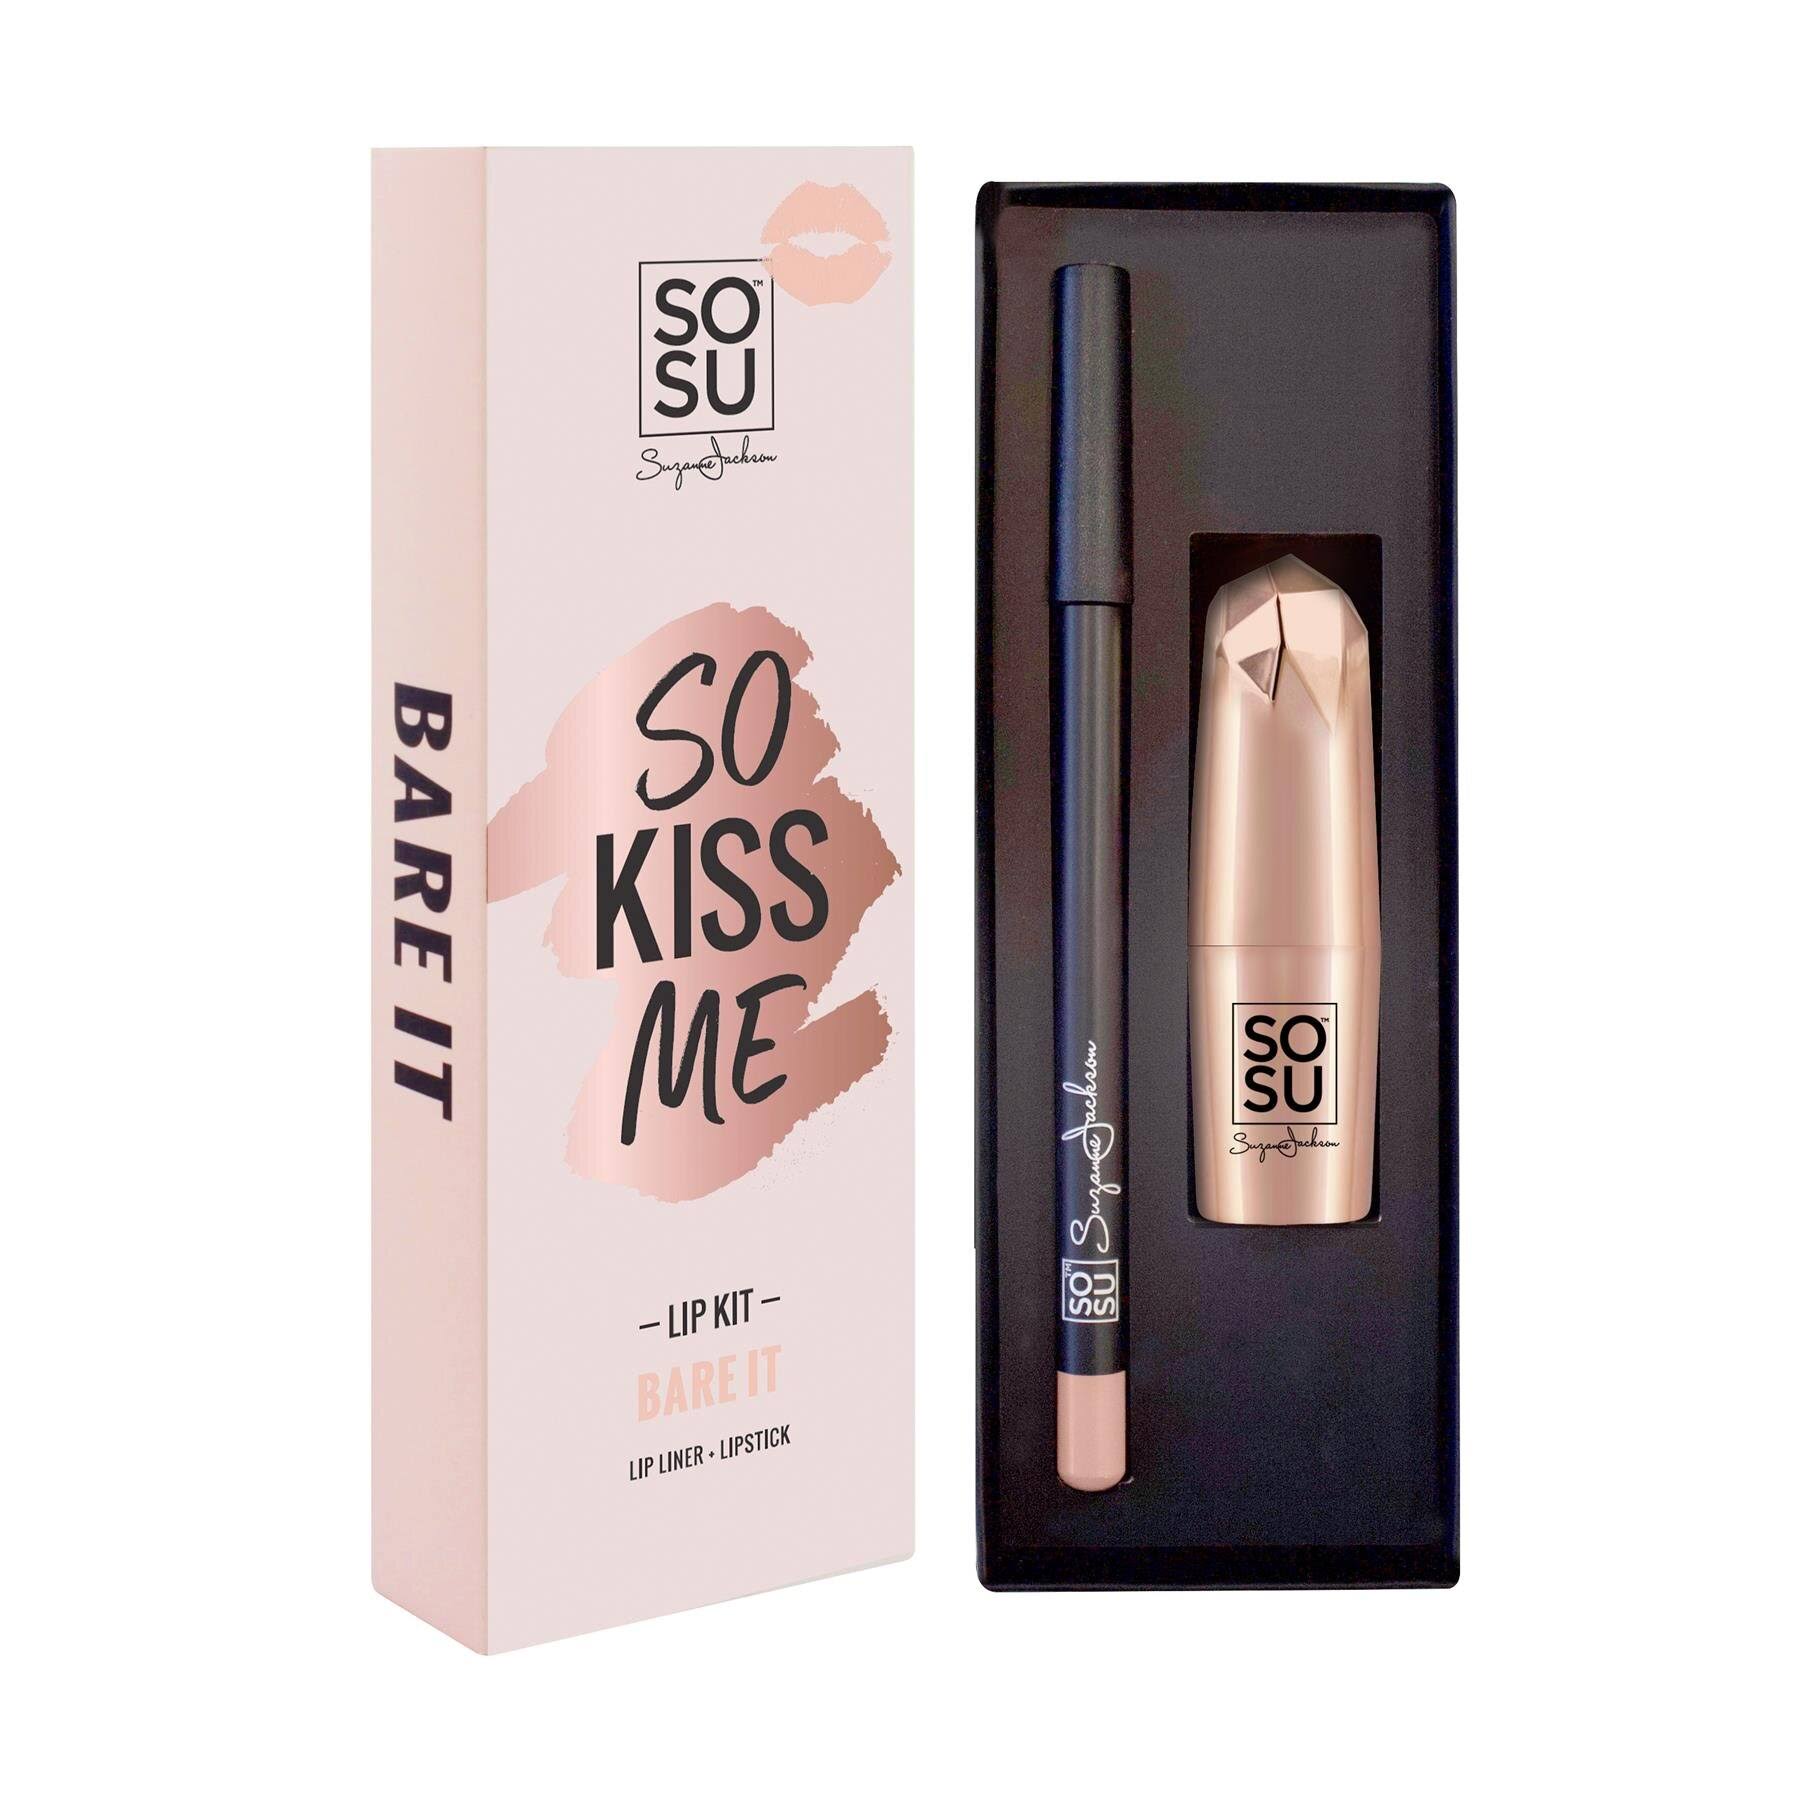 SOSU So Kiss Me Lip Kit - Bare It